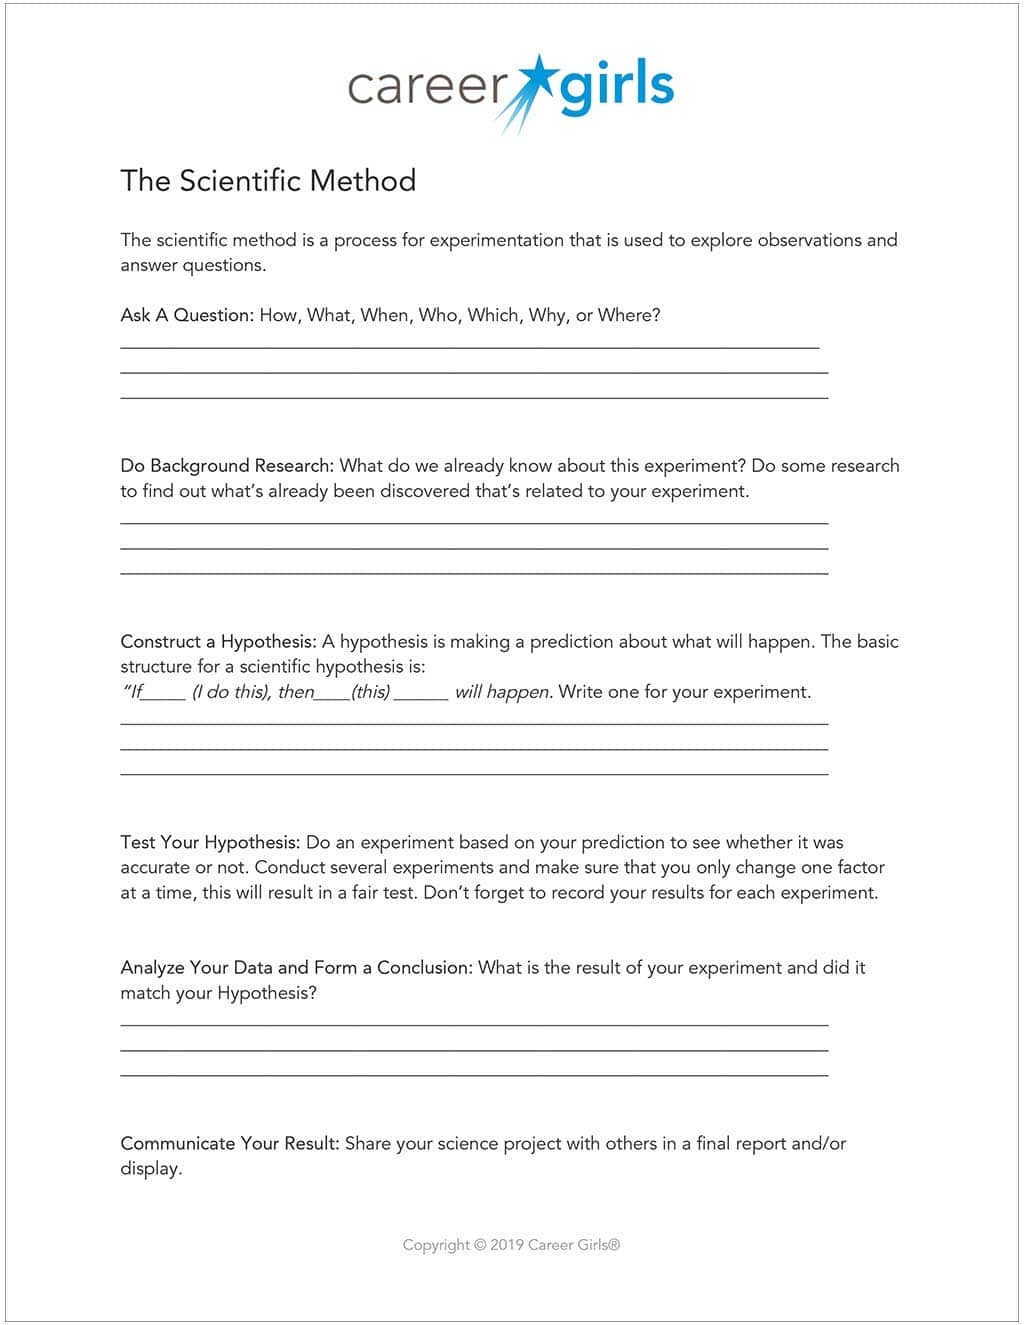 Scientific Method Handout